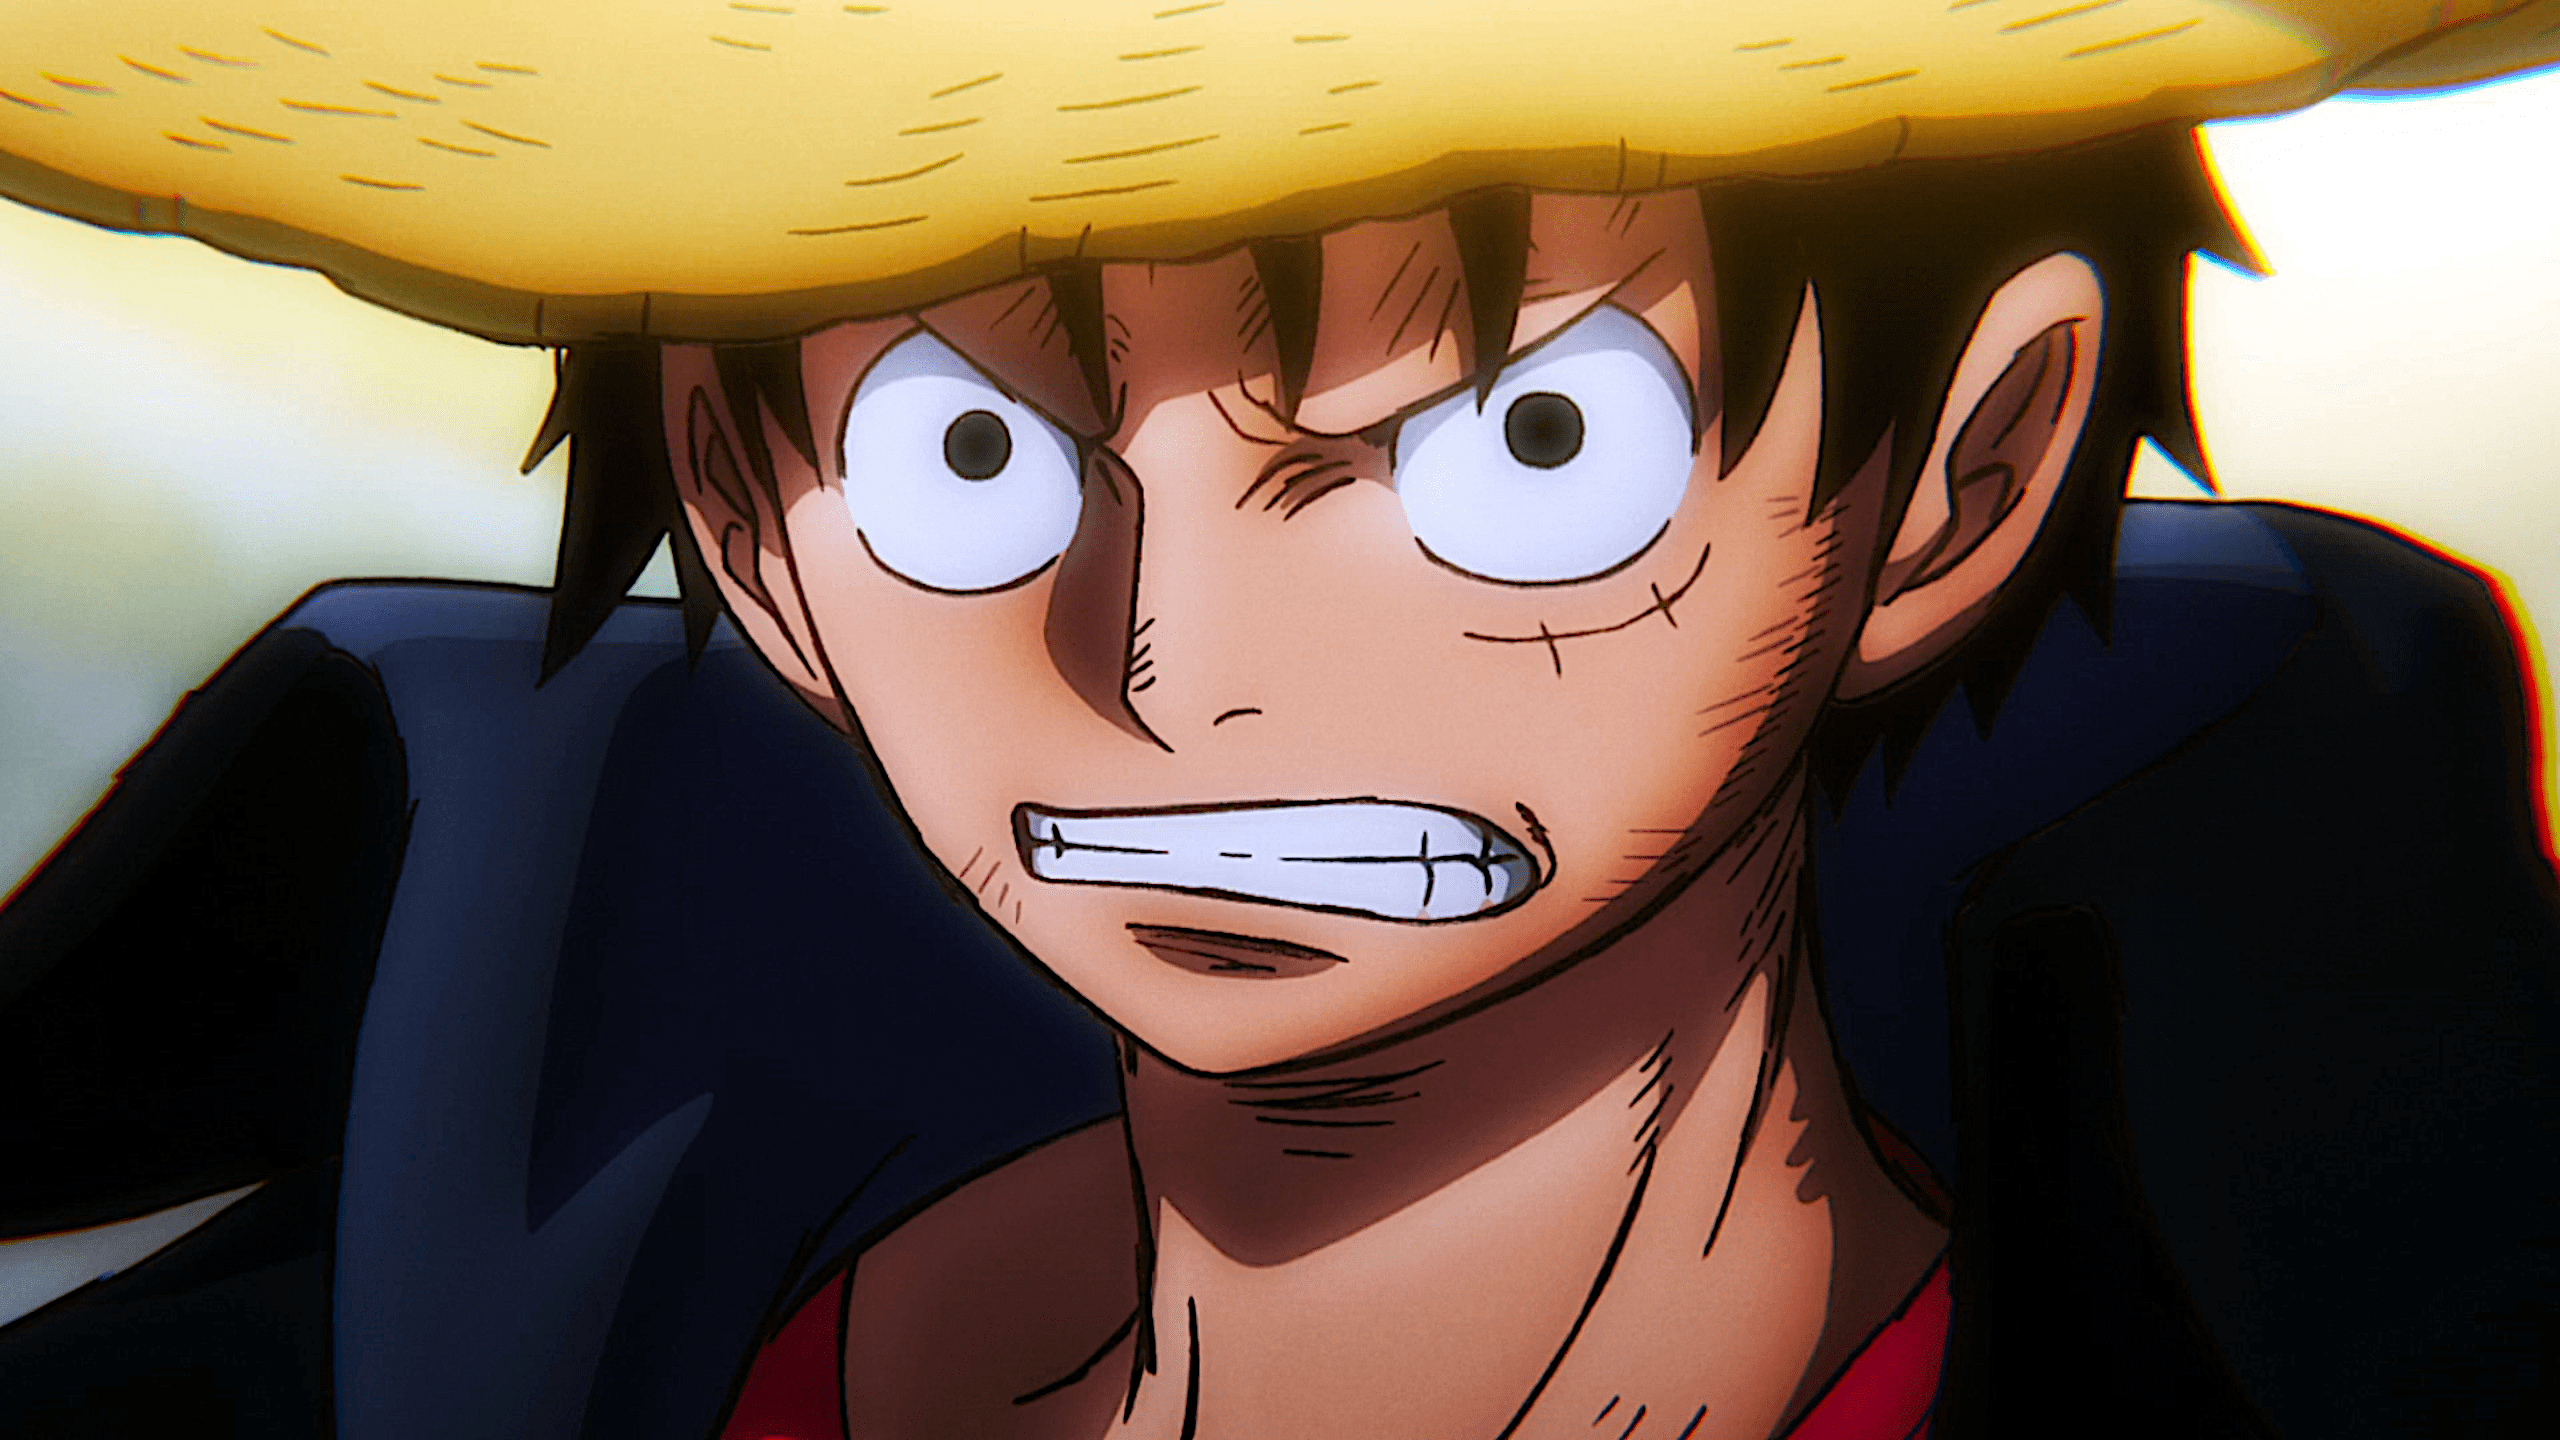 Geo on X: One Piece 1015 is still the single greatest anime